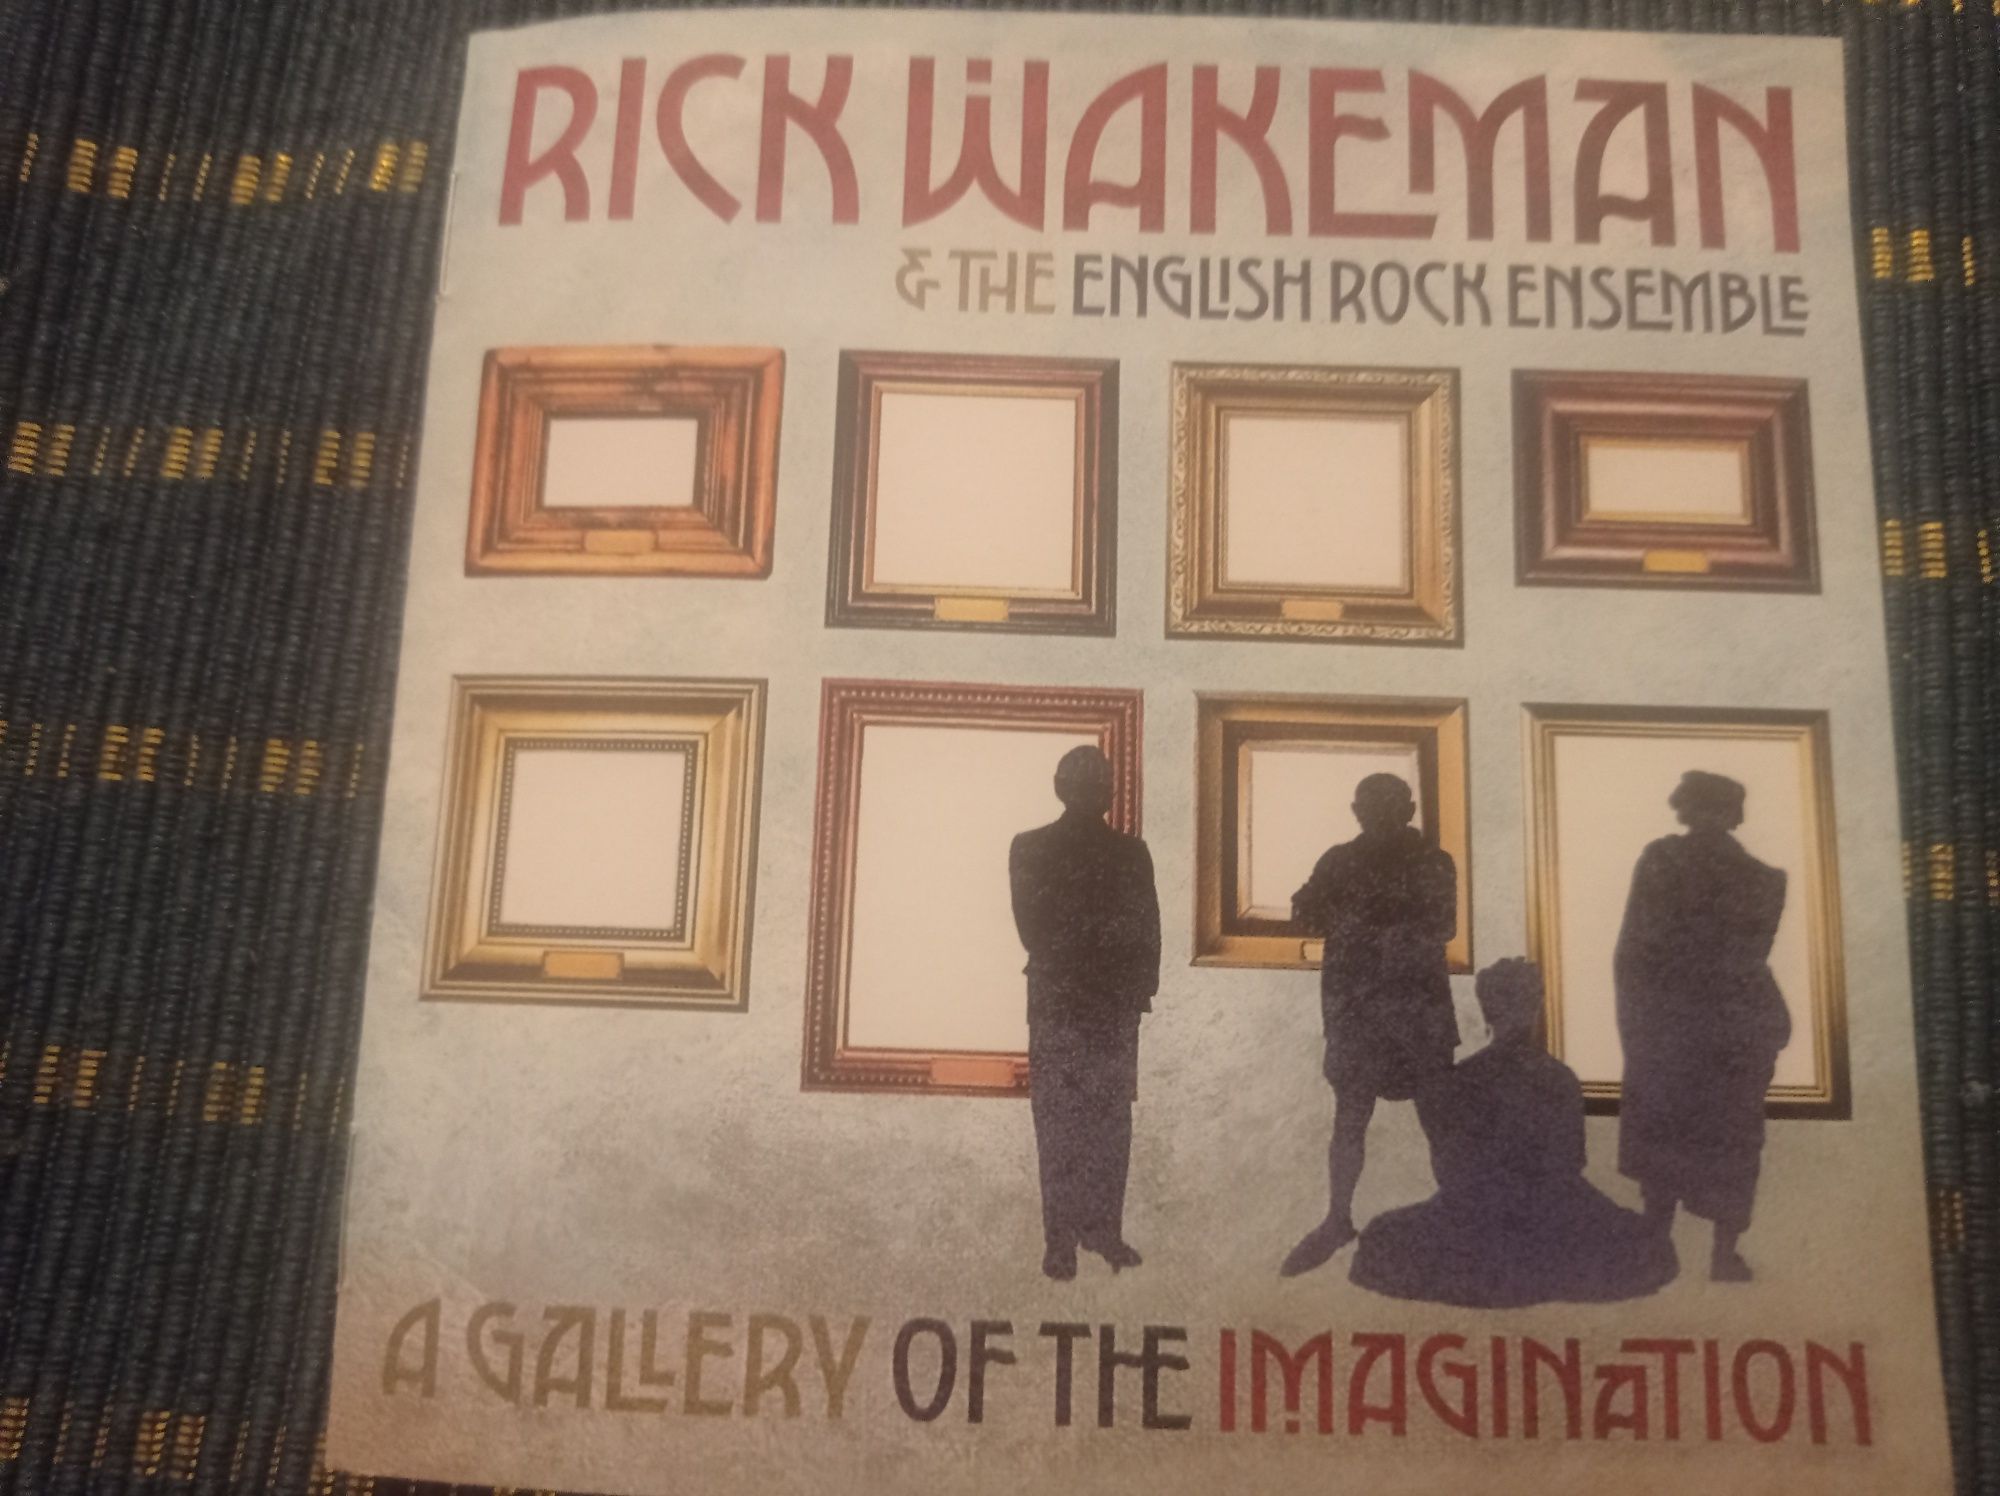 Rick Wakeman - The English rock ensemble